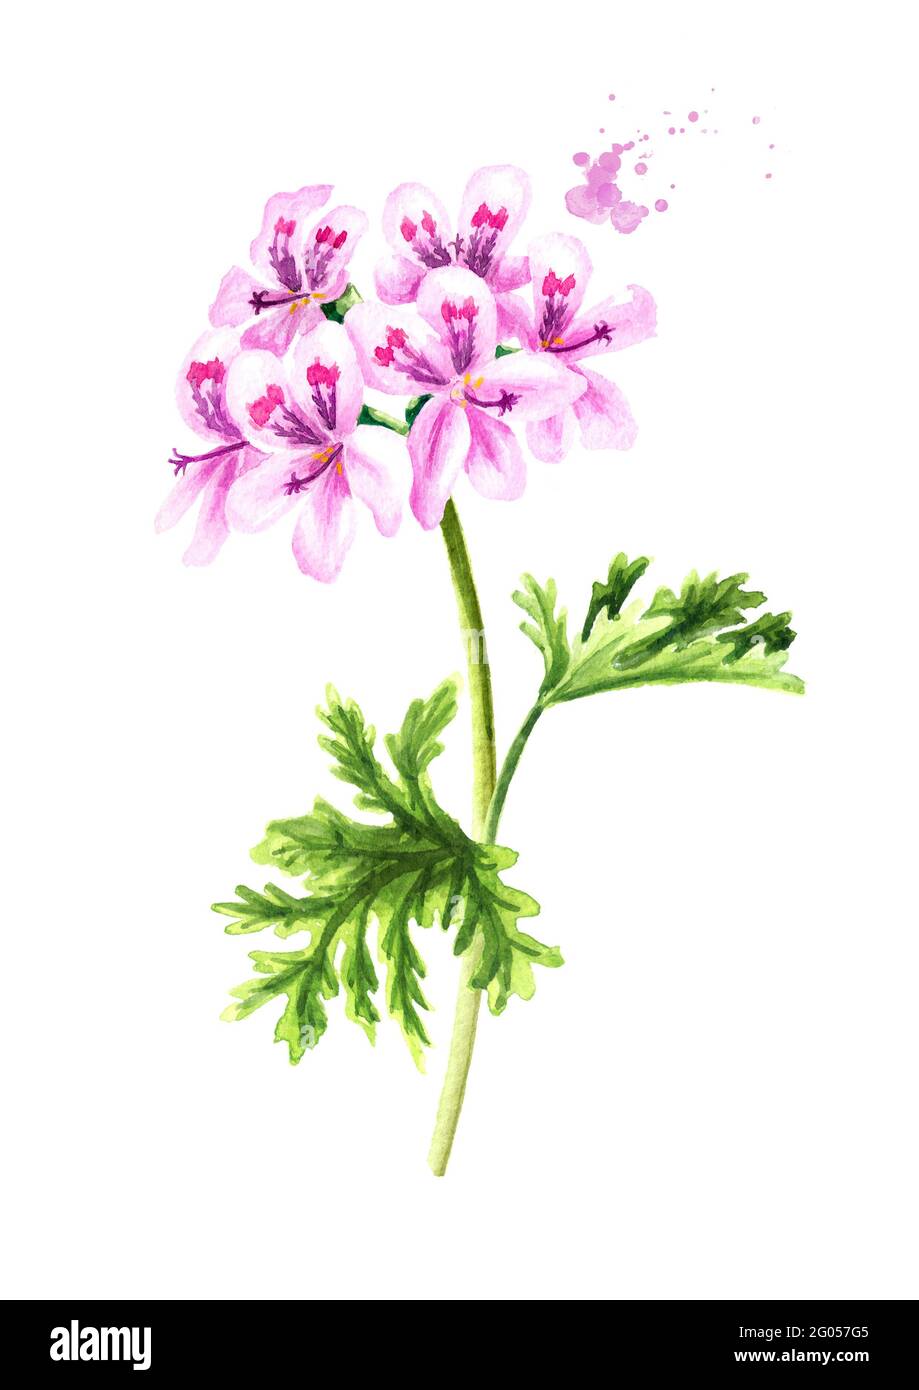 Pelargonium graveolens or Pelargonium x asperum, geranium plant, flower with leaves. Watercolor hand drawn illustration,  isolated on white background Stock Photo